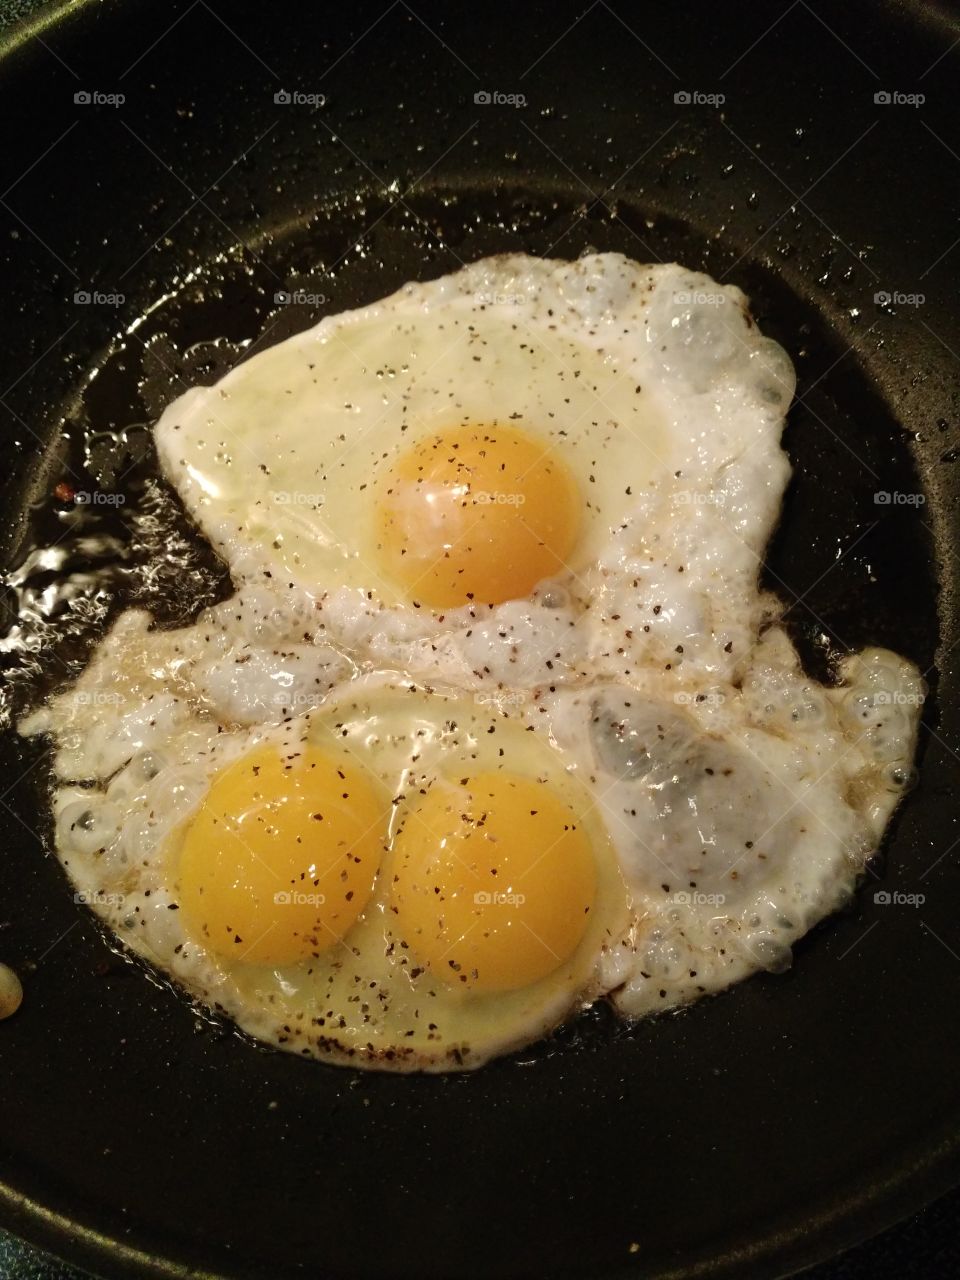 Double yolk egg.